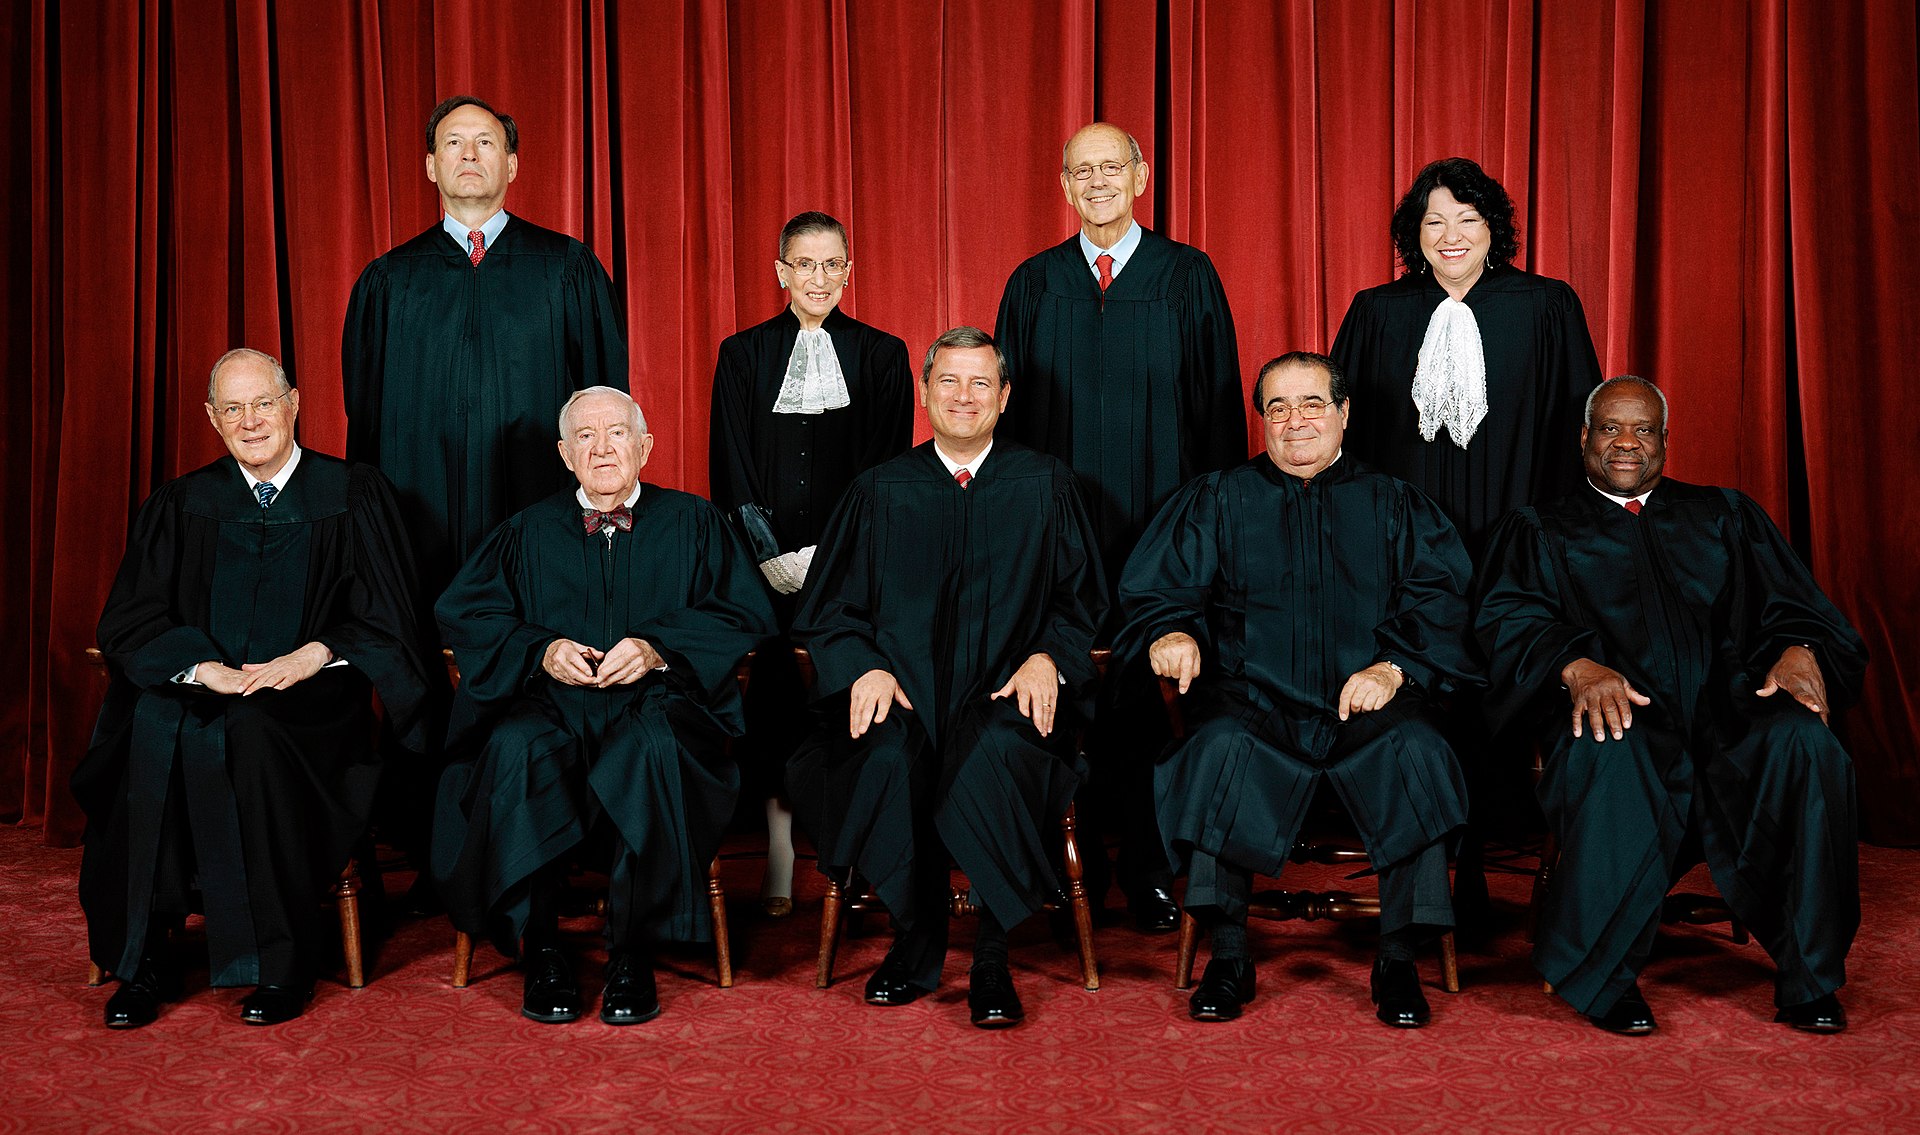 The 2009 Supreme Court Group Picture [Public domain], via Wikimedia Commons